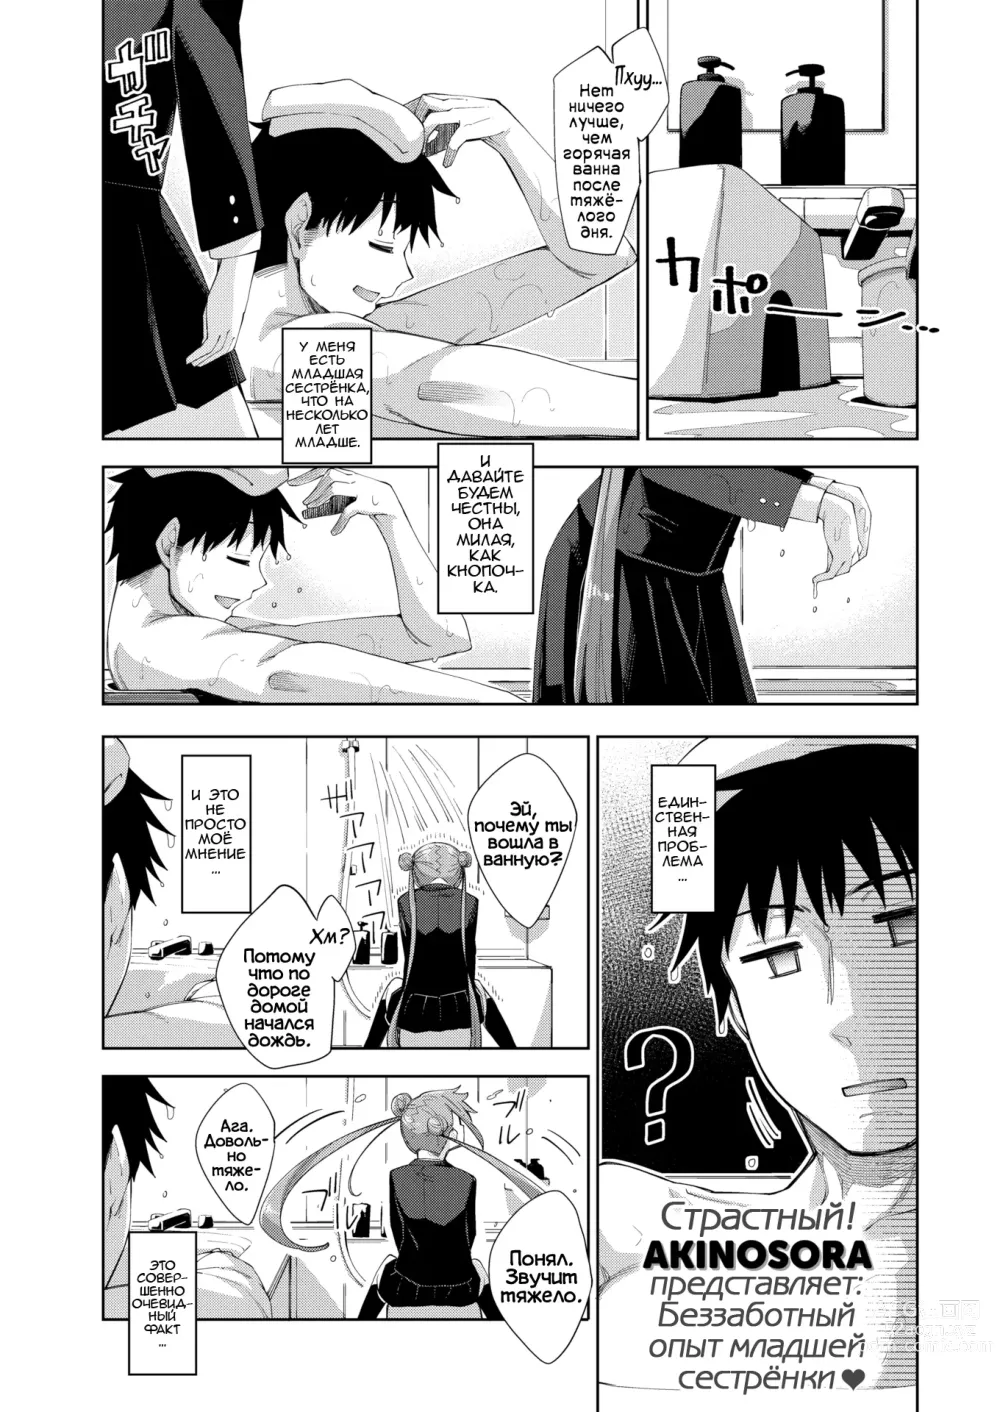 Page 1 of manga Aho No Ko!